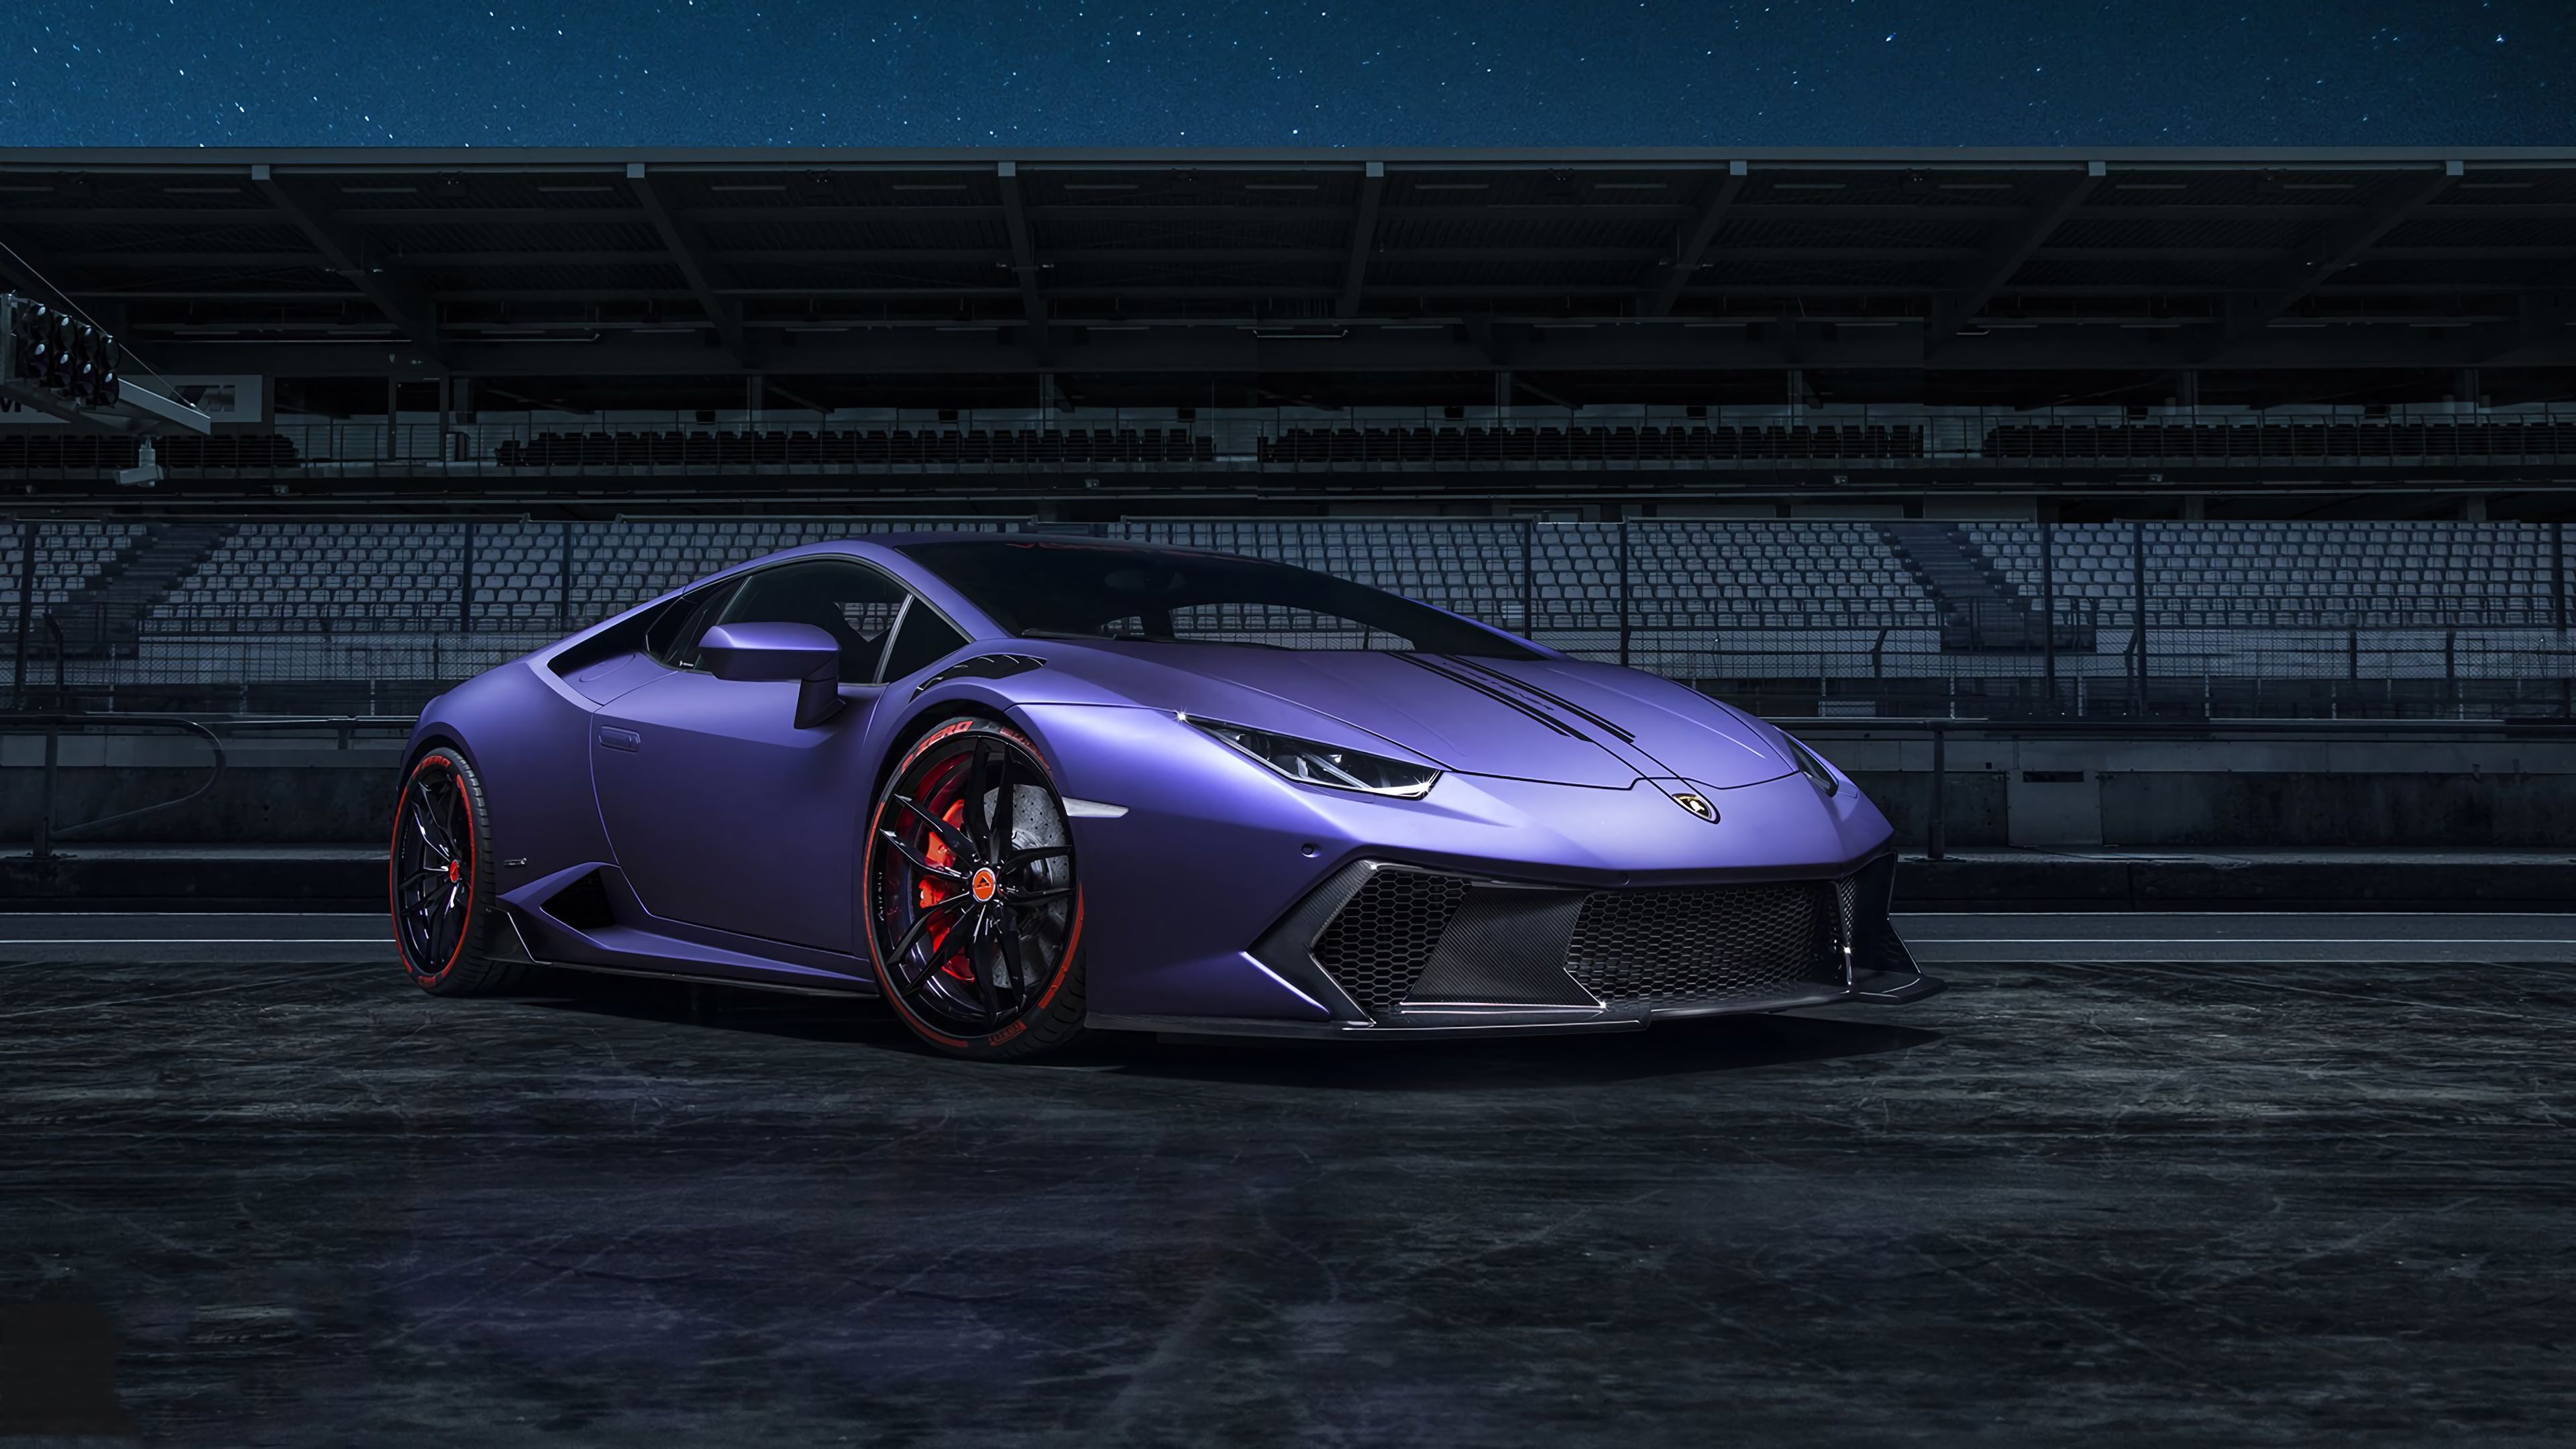 Purple Lamborghini 4k HD Cars, 4k Wallpaper, Image, Background, Photo and Picture